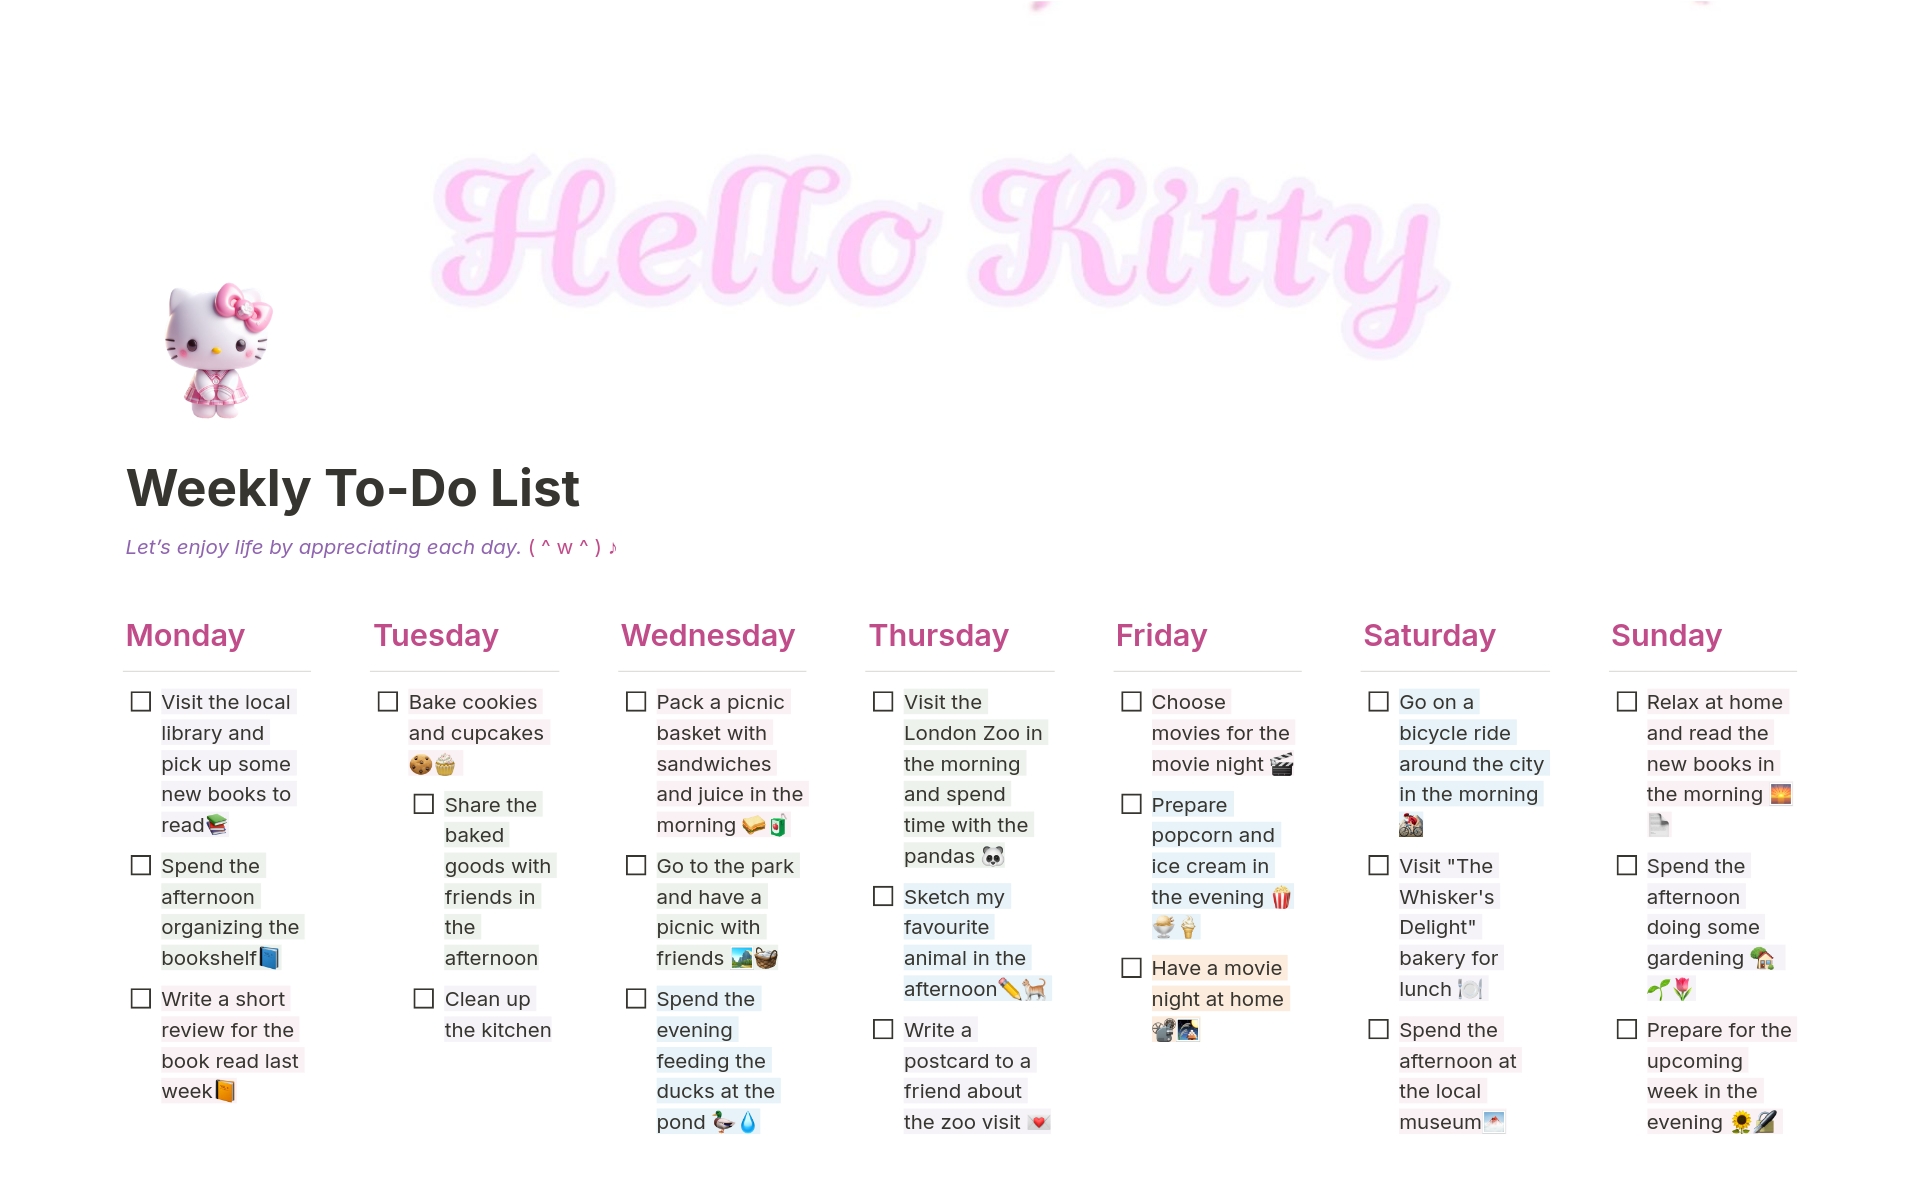 Hello Kitty Weekly To-Do List님의 템플릿 미리보기